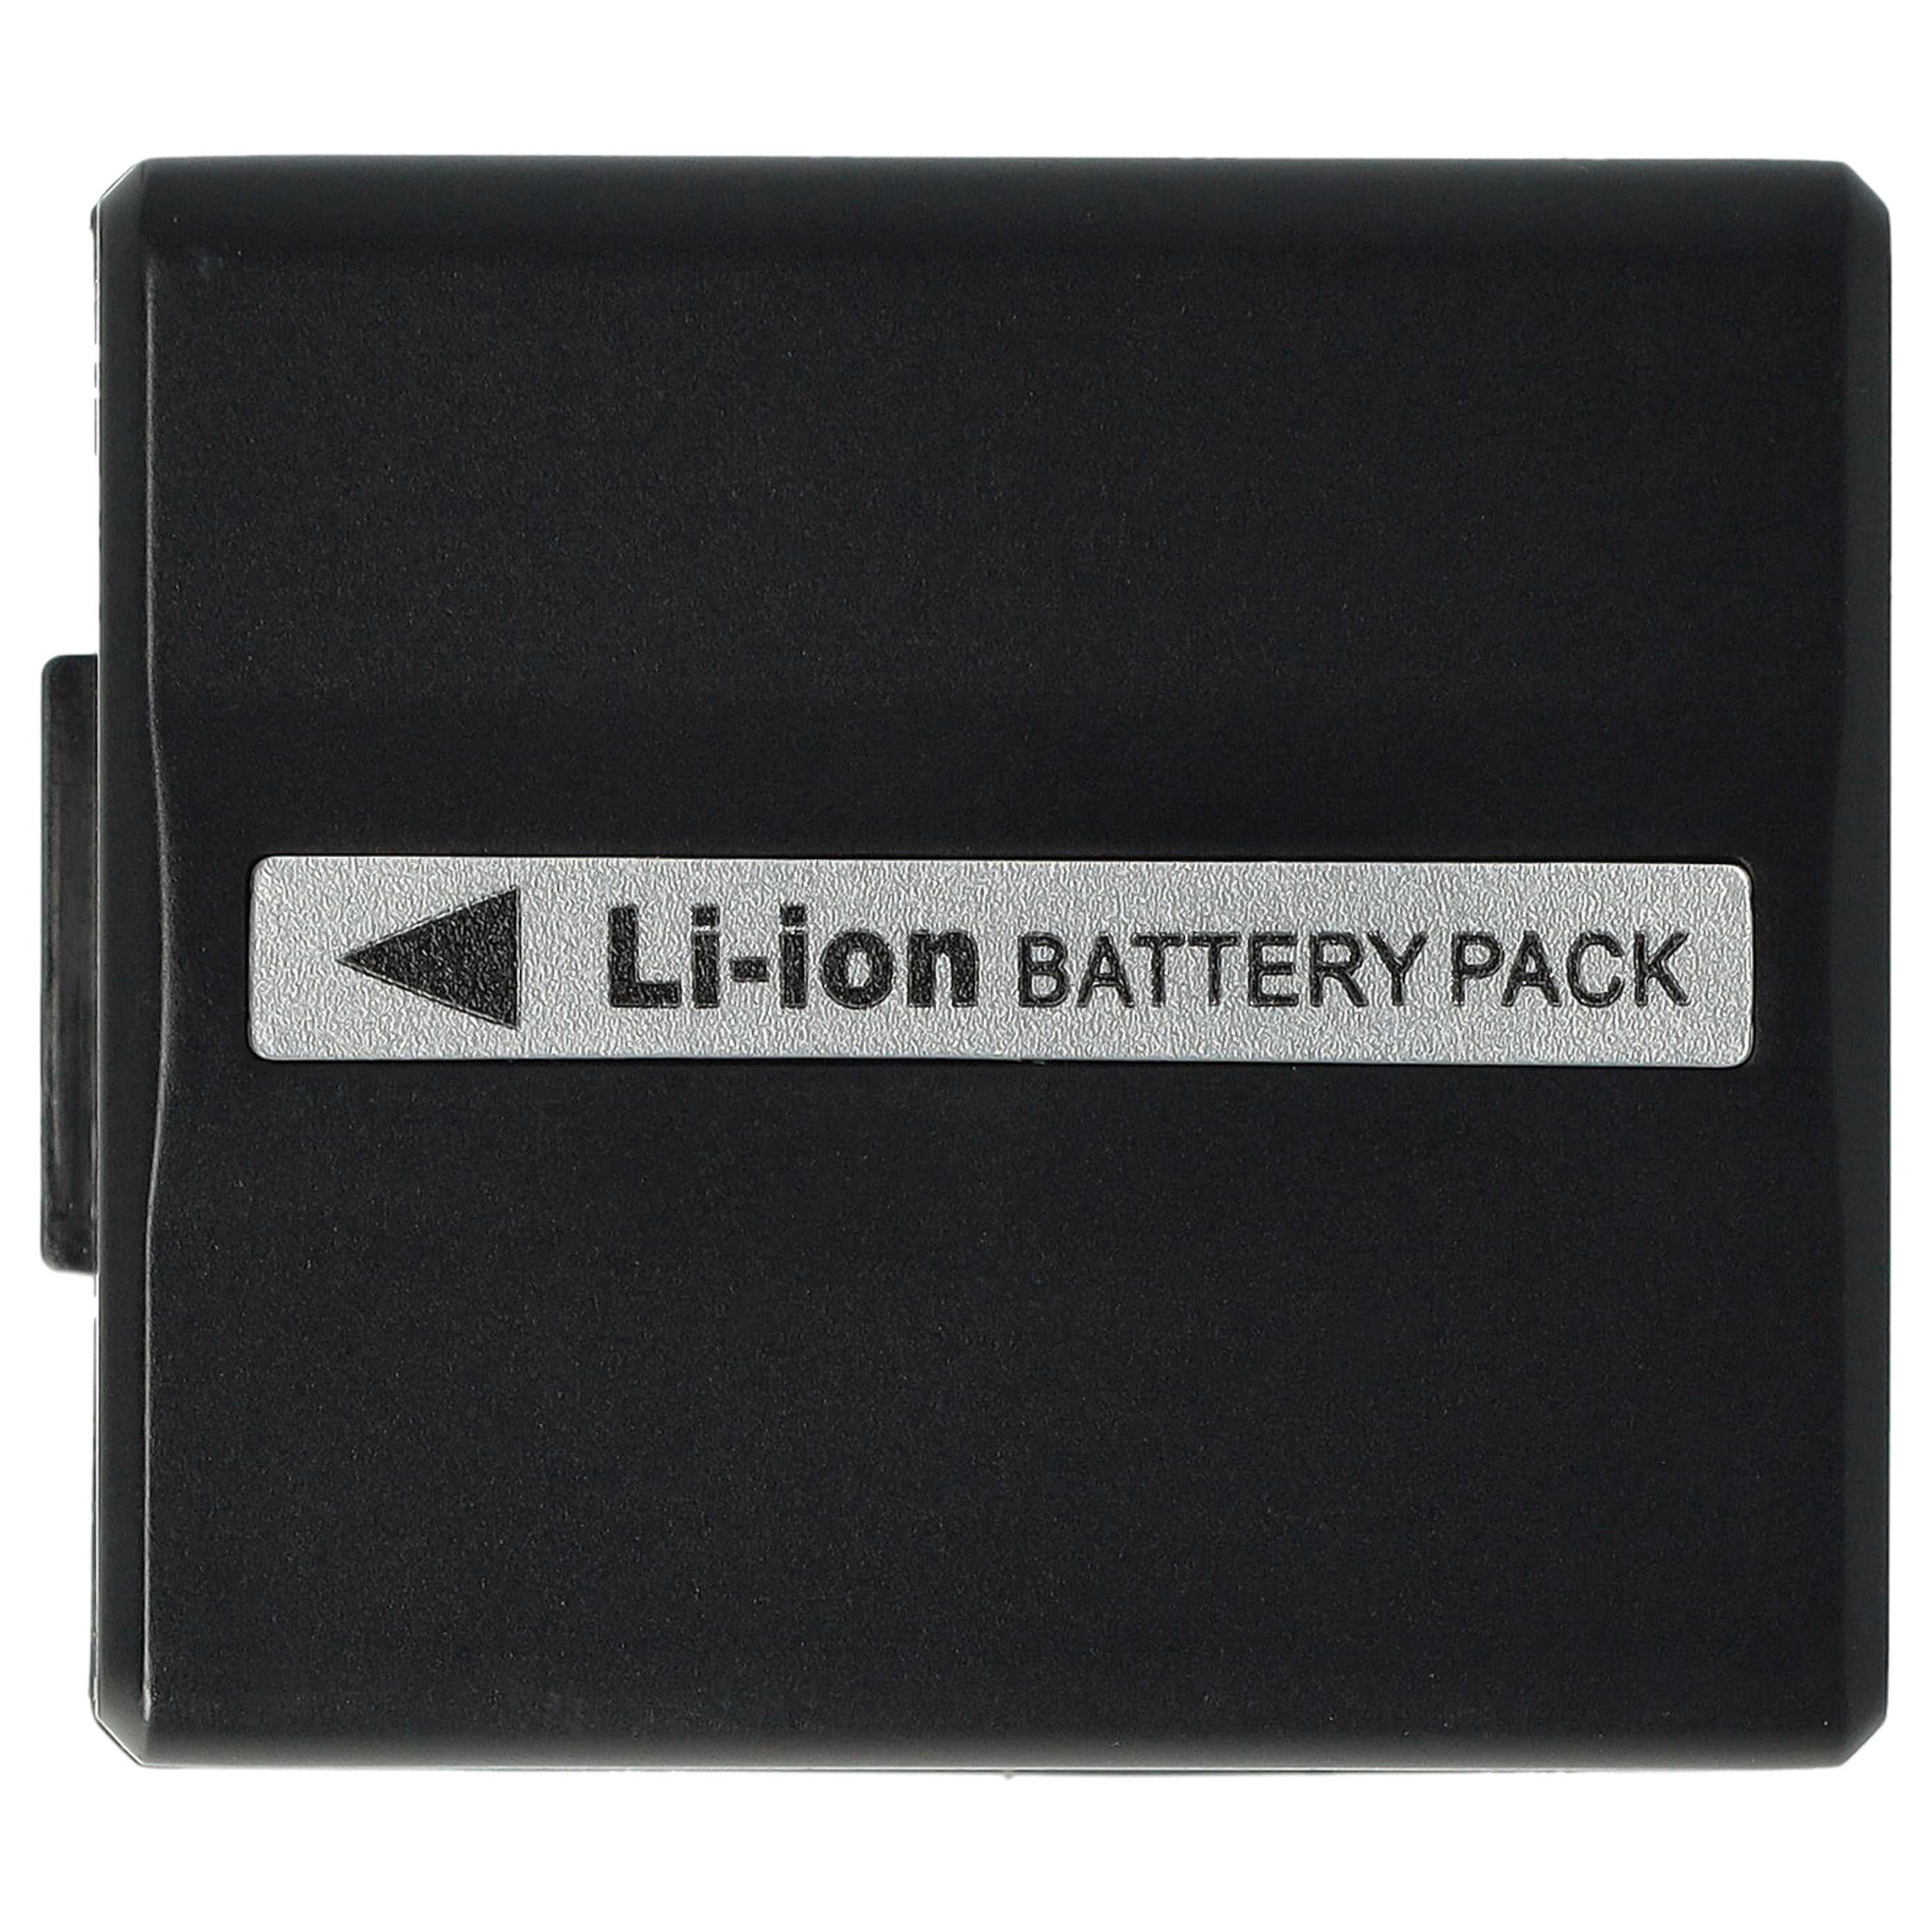 Videocamera Battery Replacement for Hitachi DZ-BP07s, DZ-BP14s, DZ-BP21s - 600mAh 7.2V Li-Ion